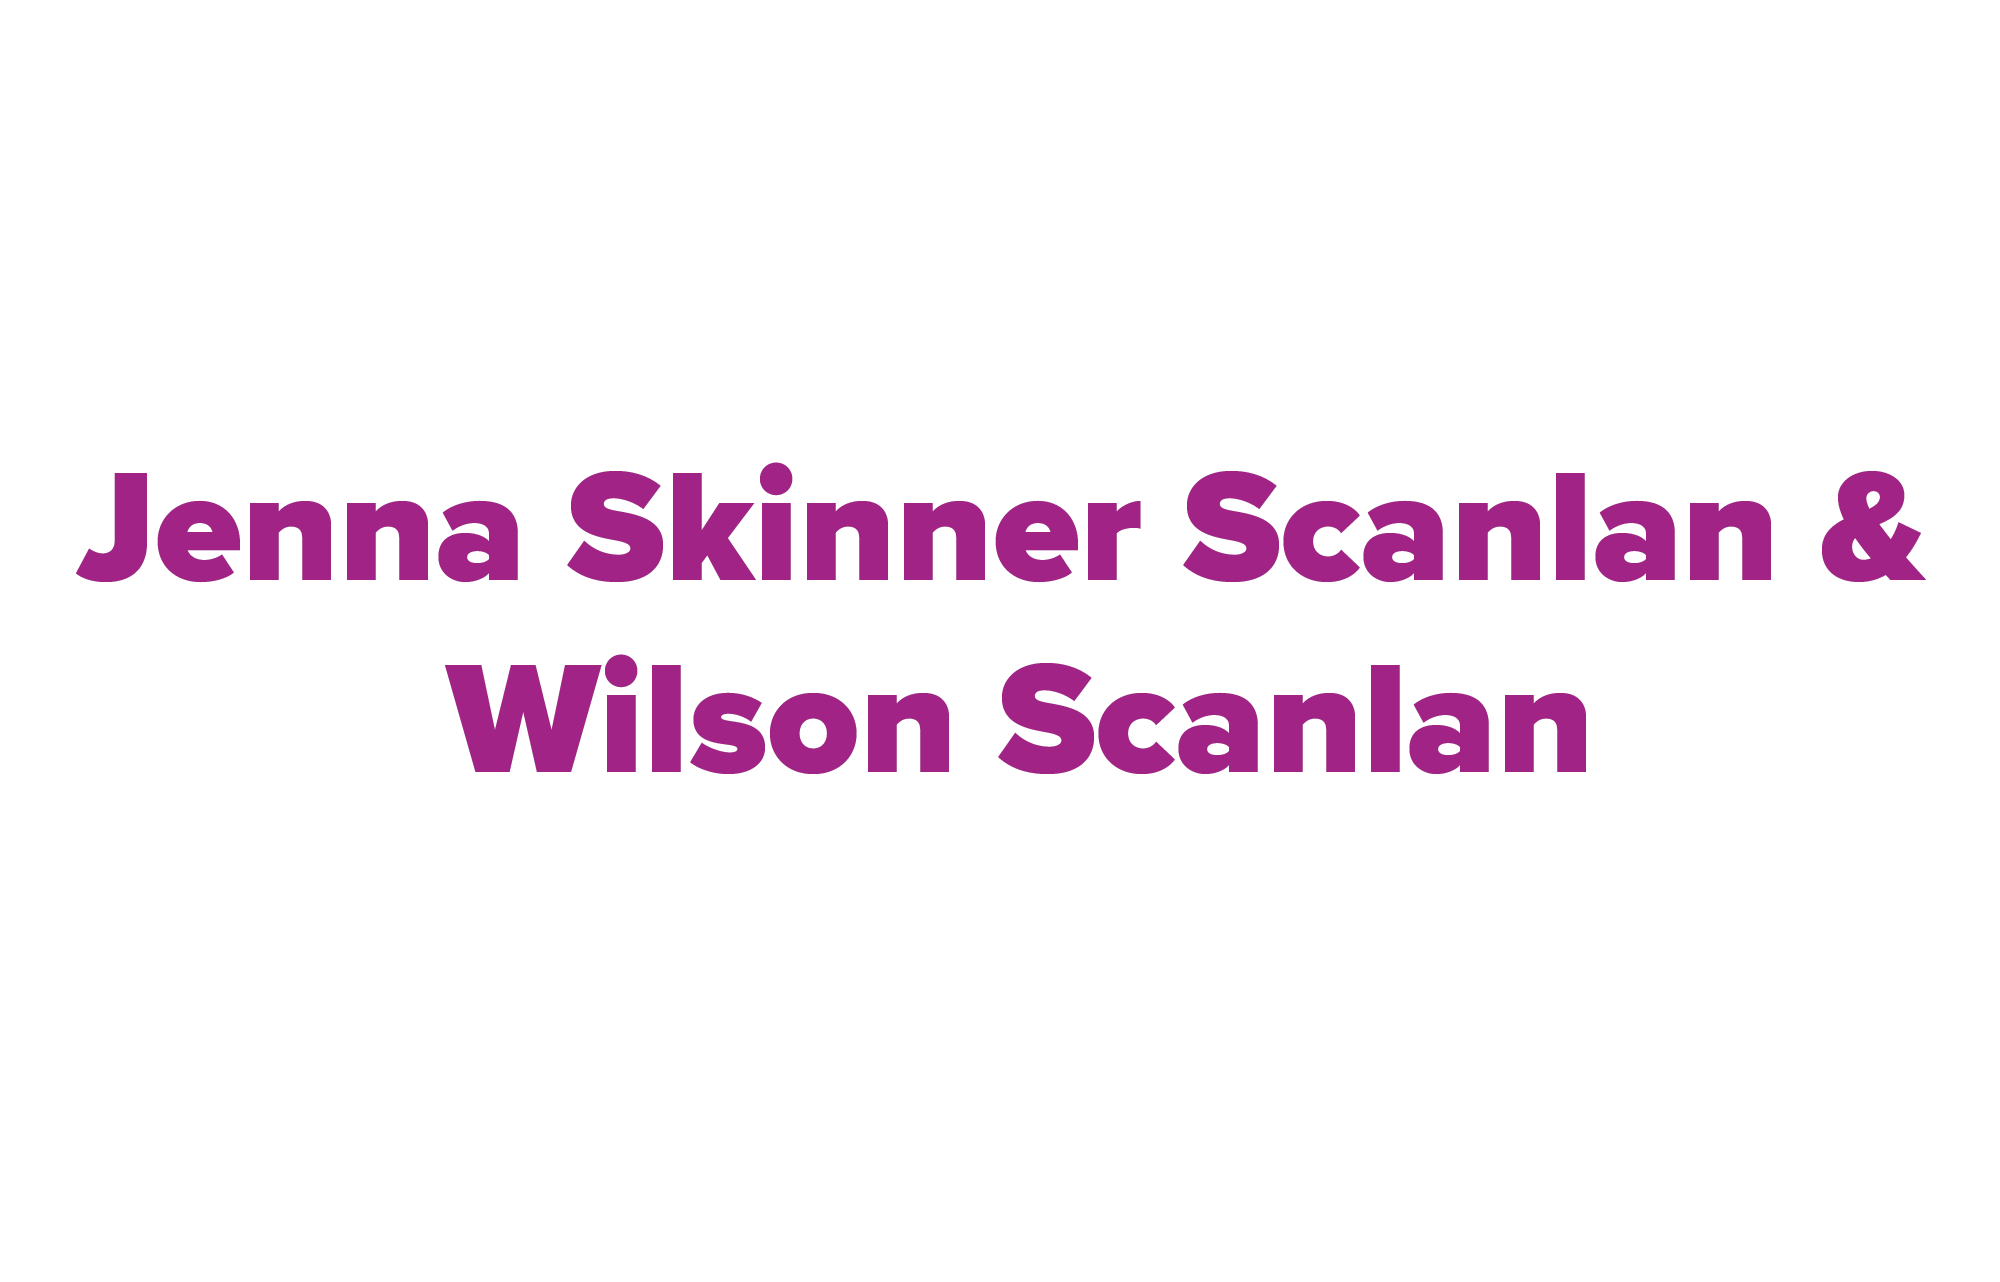 Jenna Skinner Scanlan & Wilson Scanlan